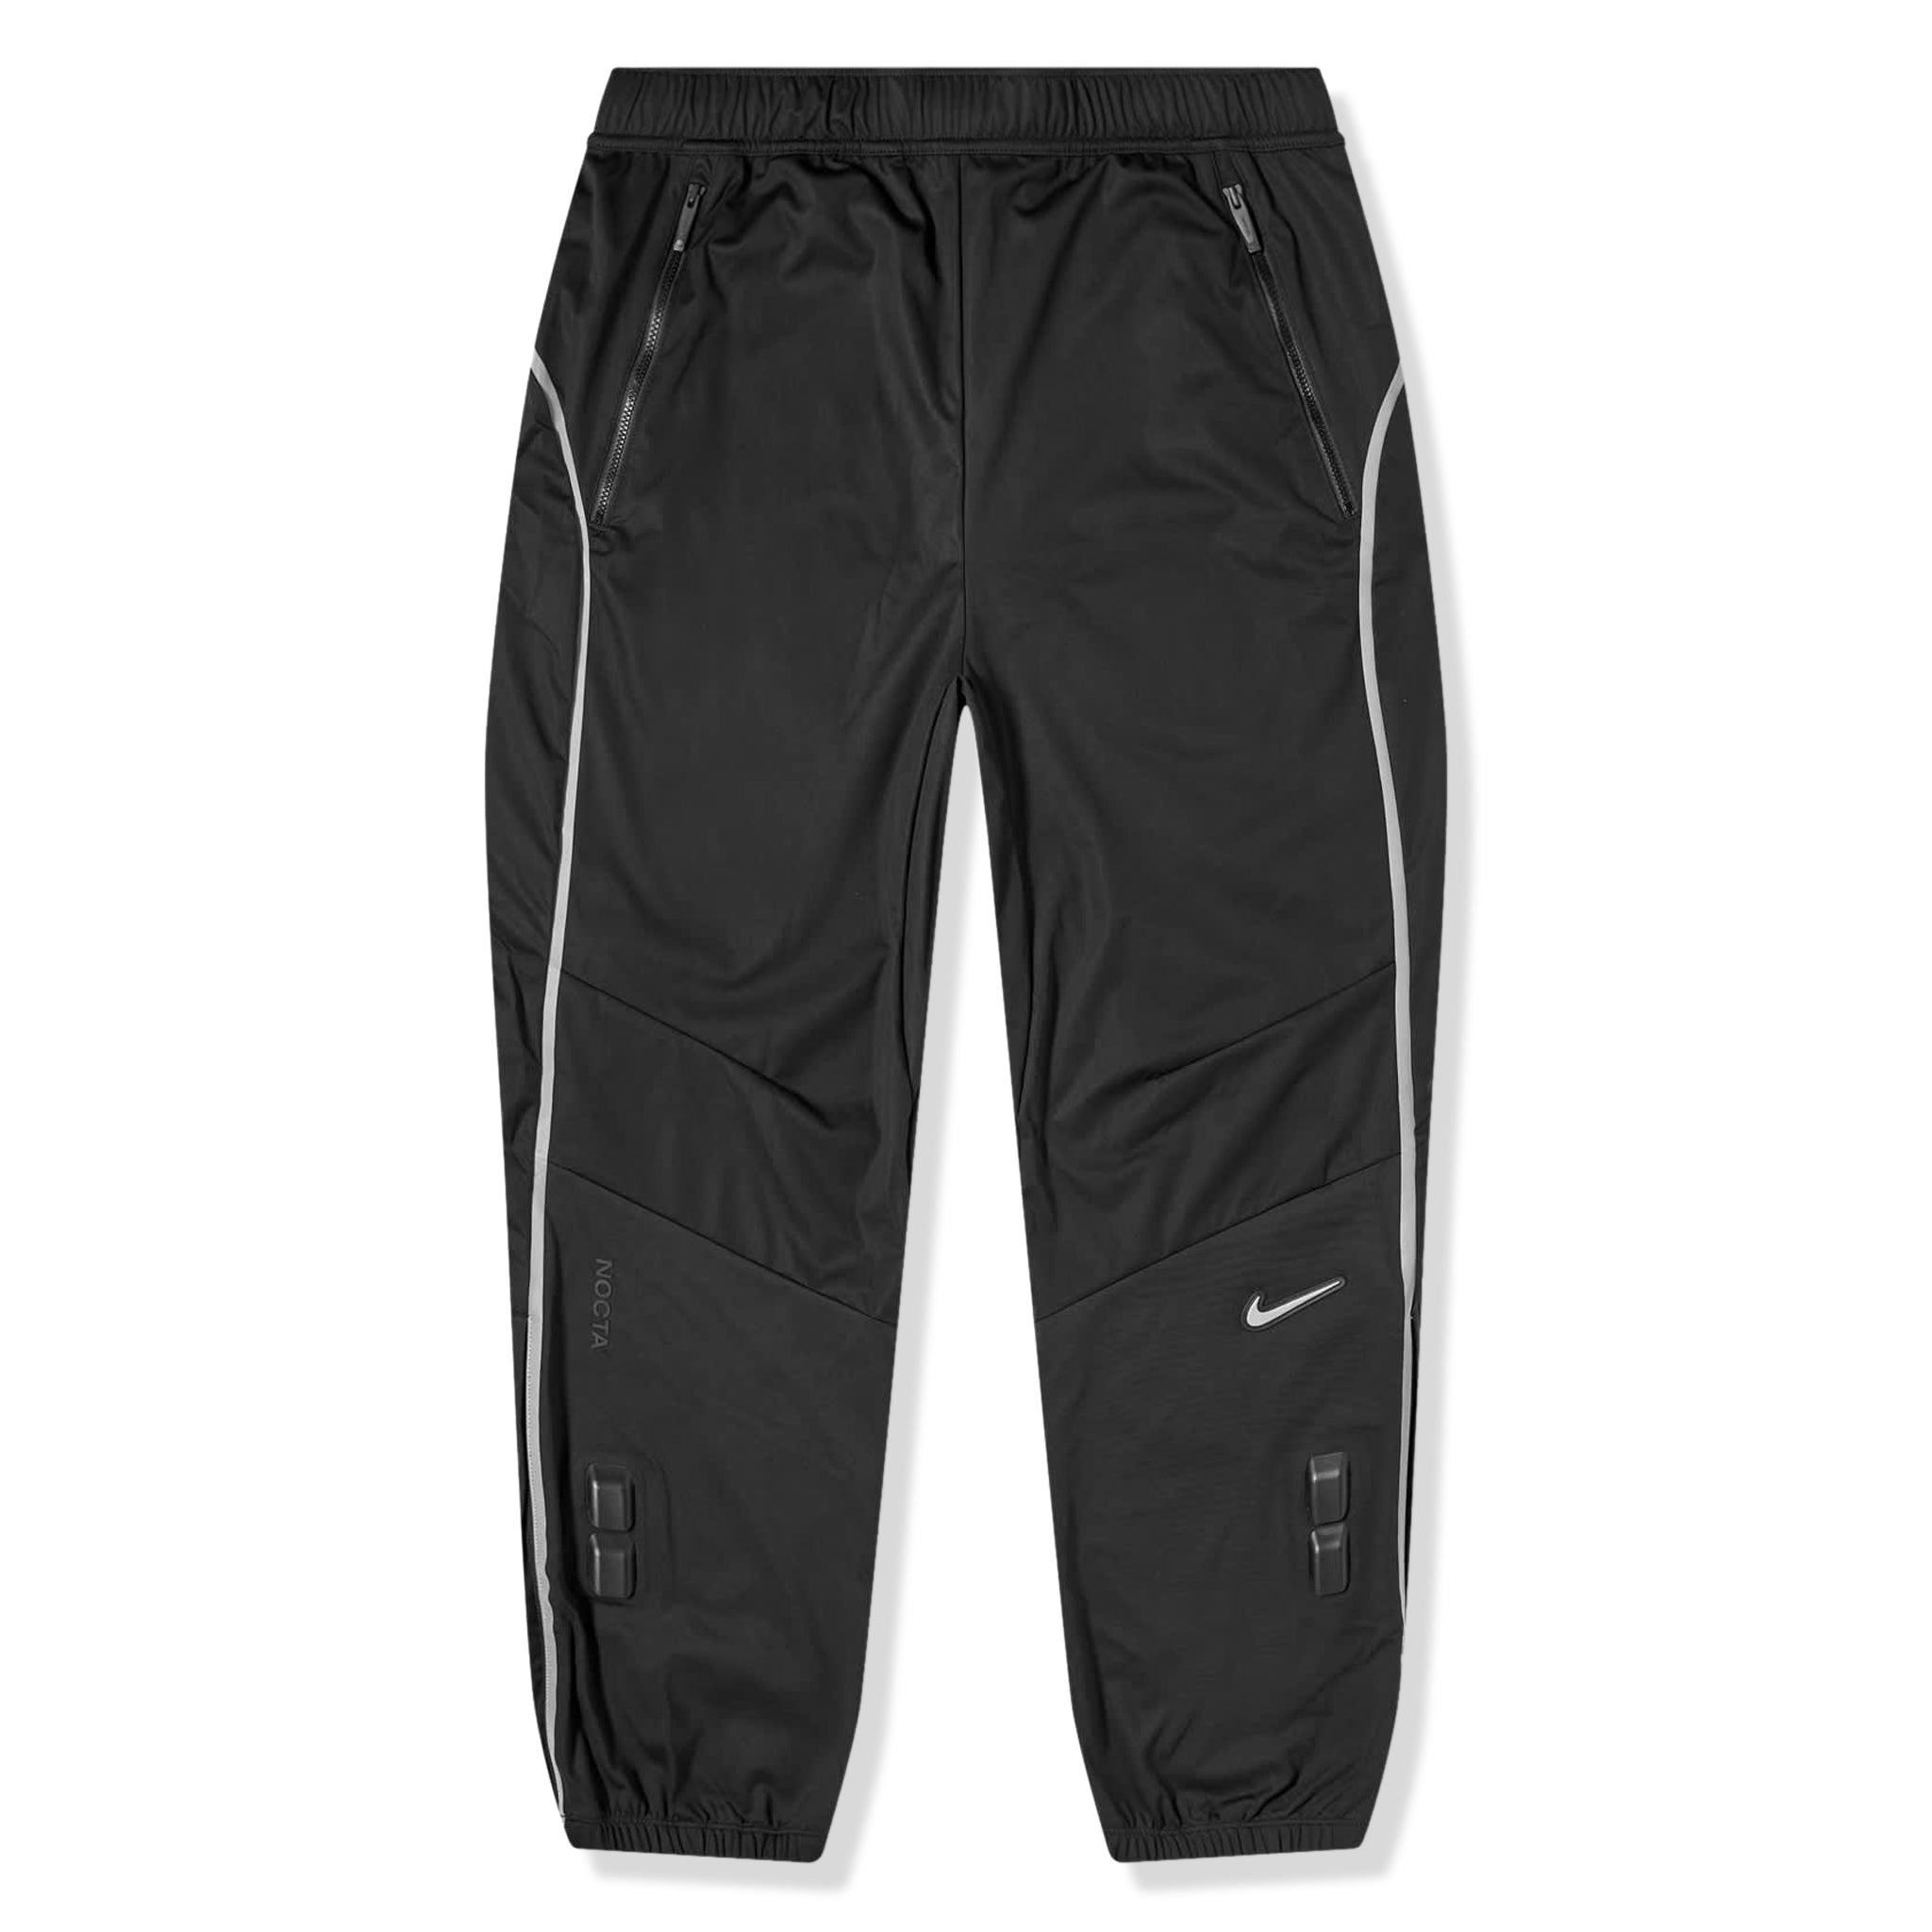 Nike Women's Swoosh Run Track Pants - Black/Grey Fog/White